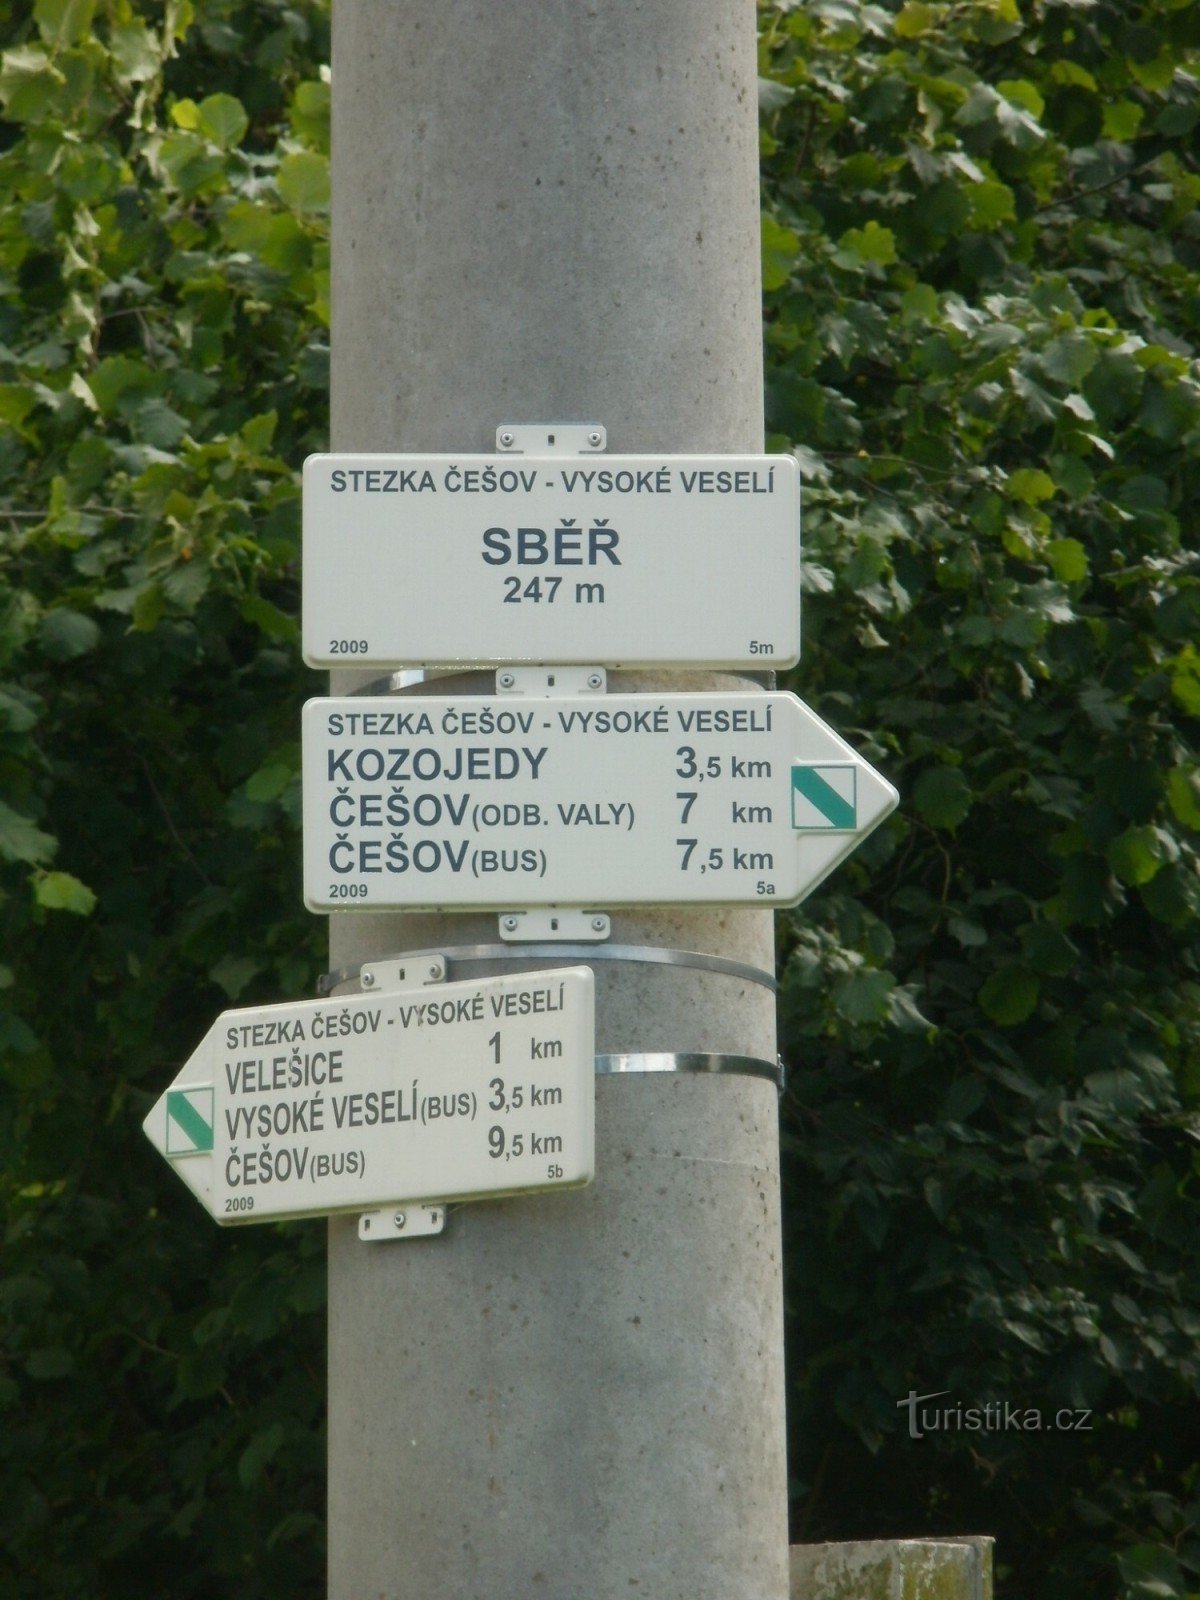 intersección de NS Češov-Vysoké Veselí - Sběř